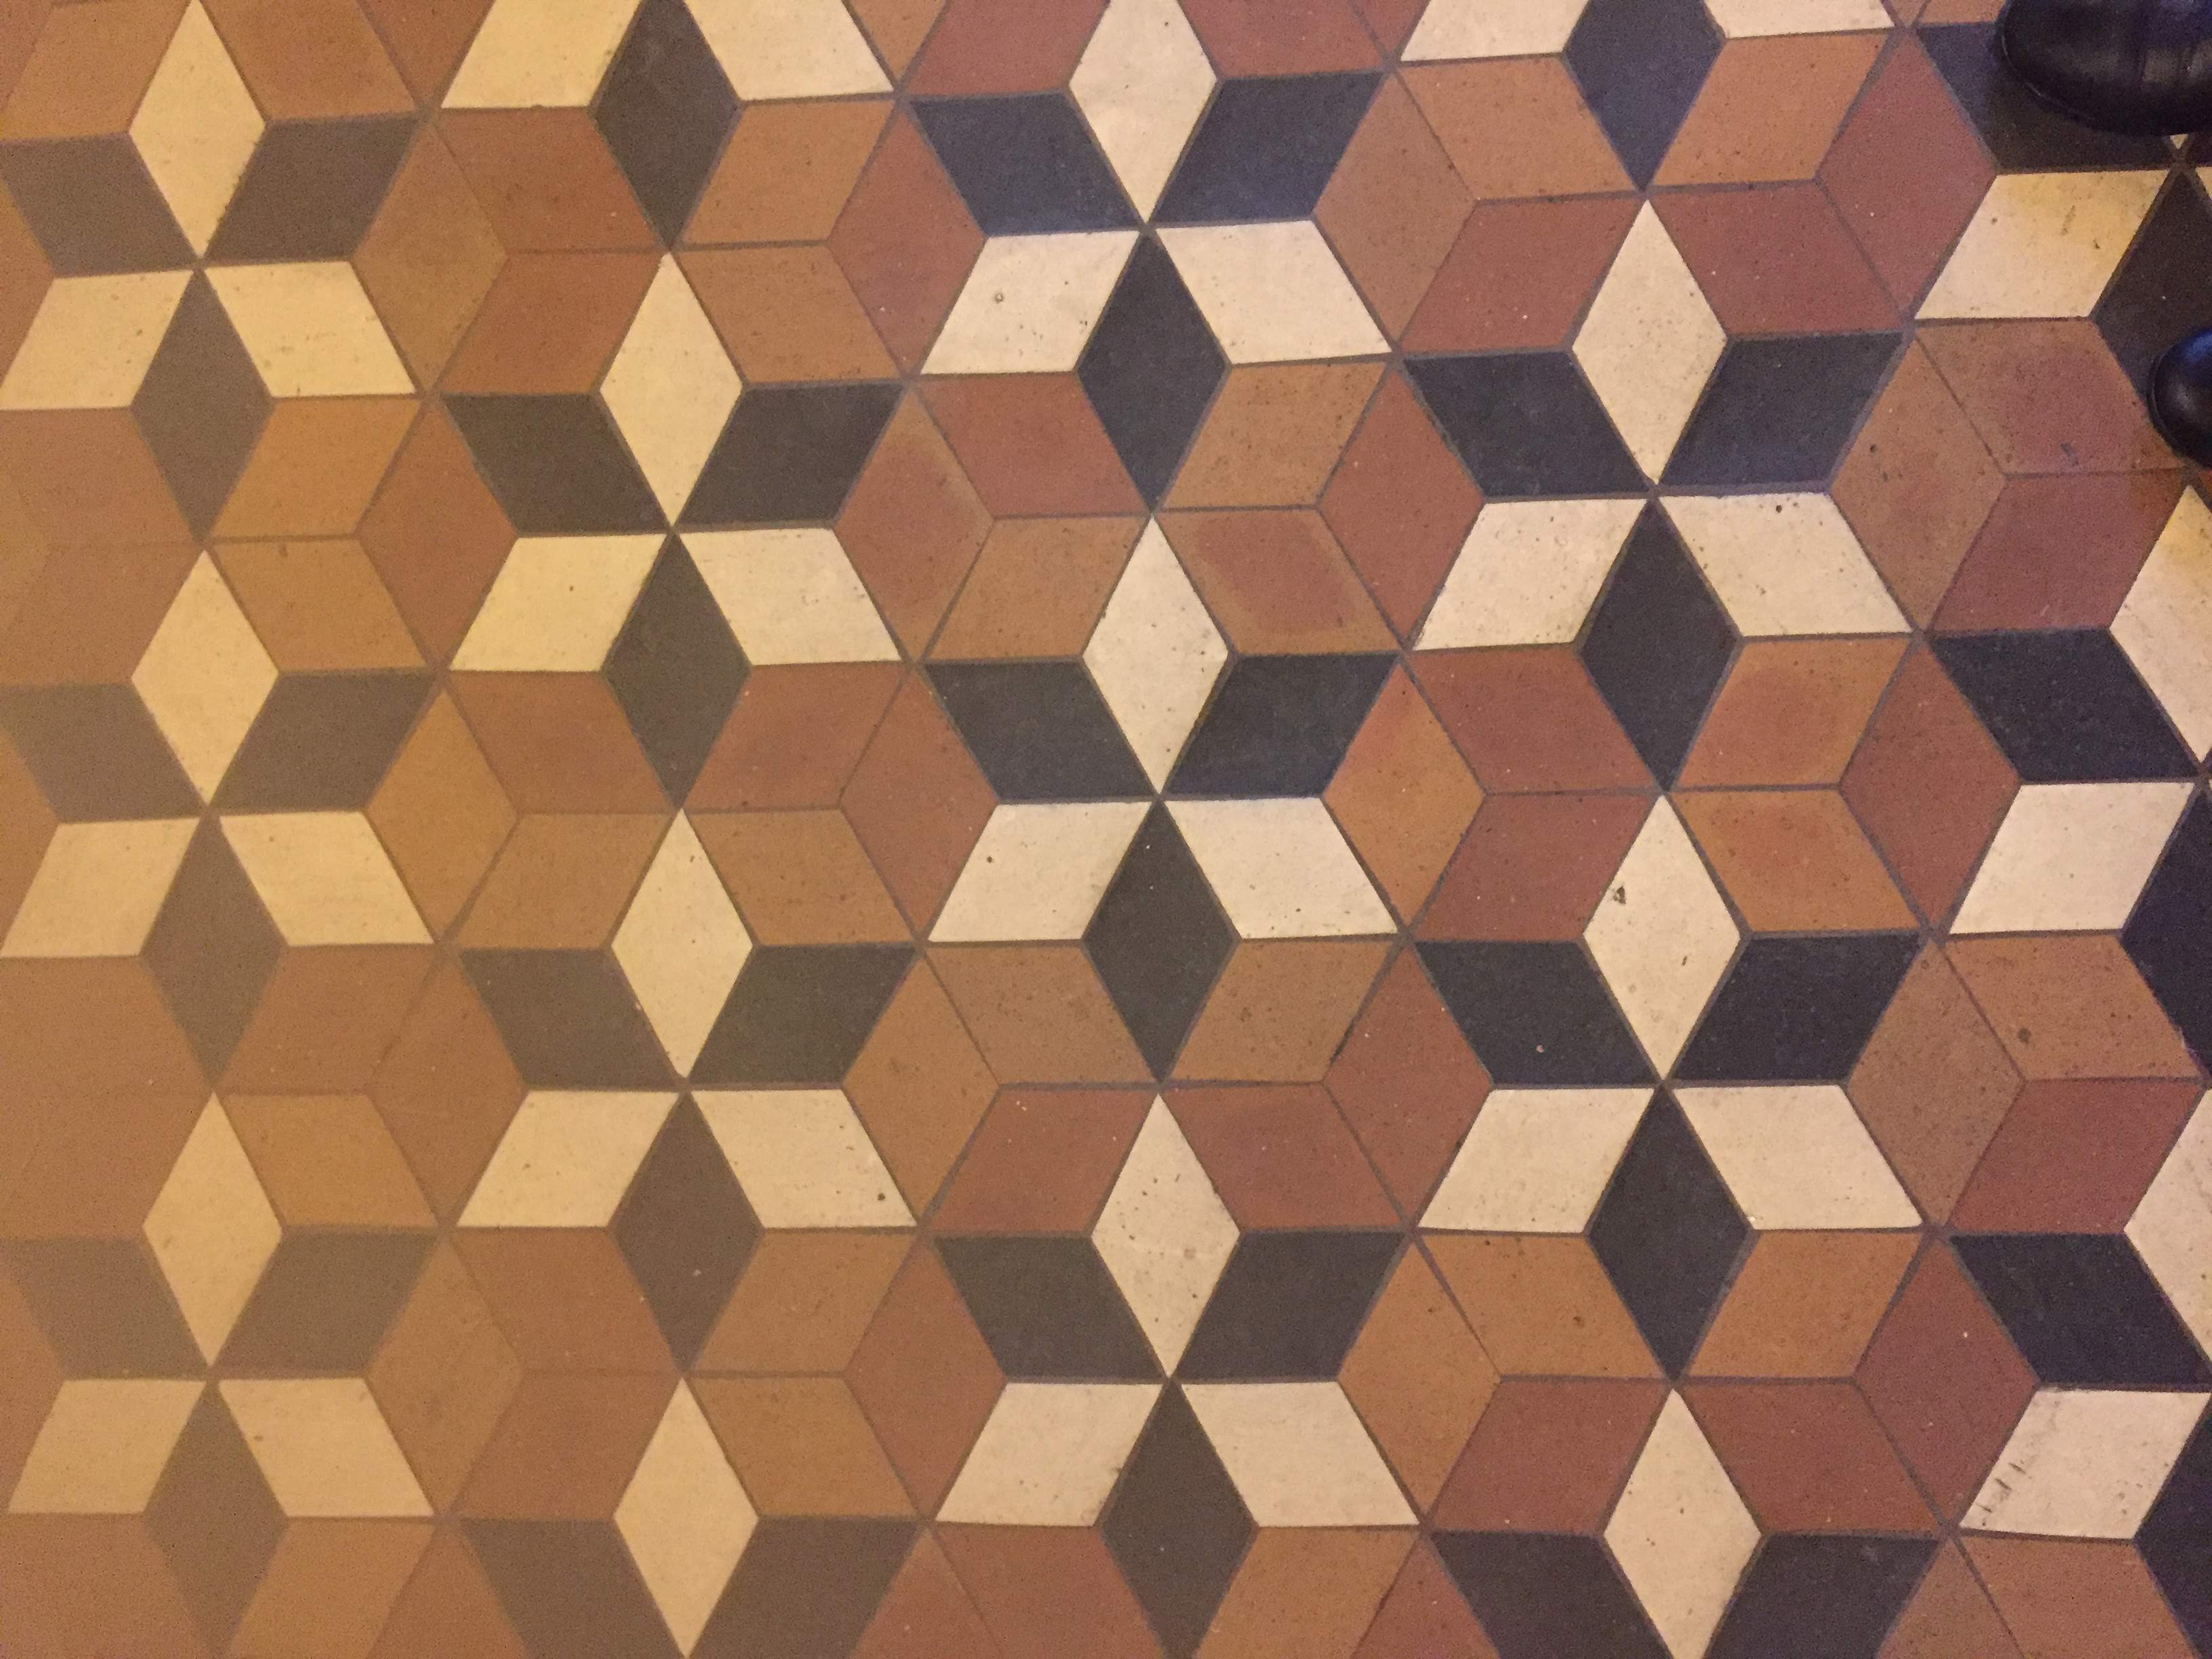 A tiled floor pattern